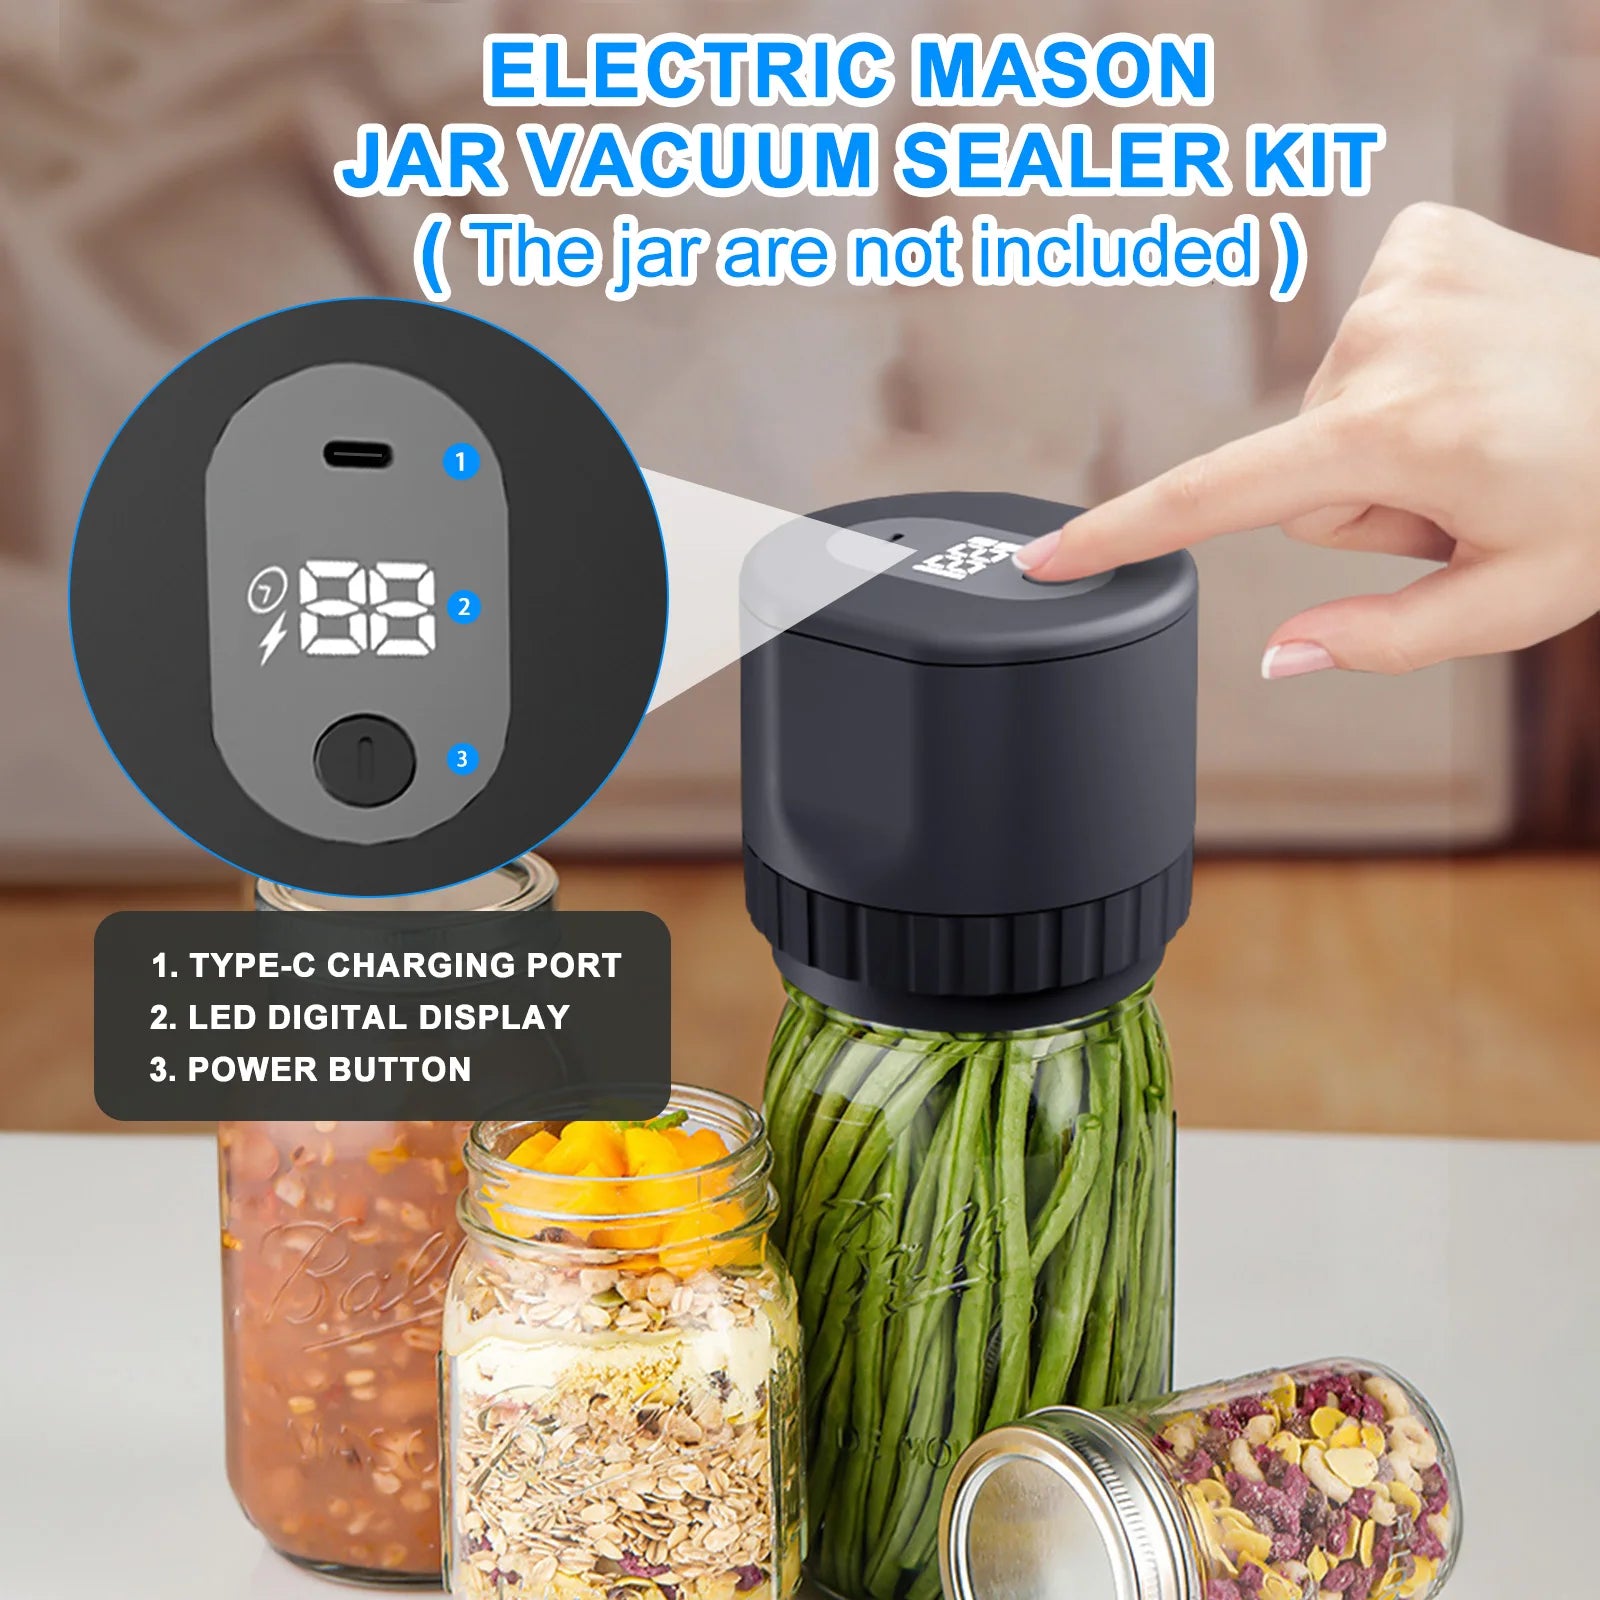 Cordless Automatic Electric Mason Jar Vacuum Sealer Kit ARCHE